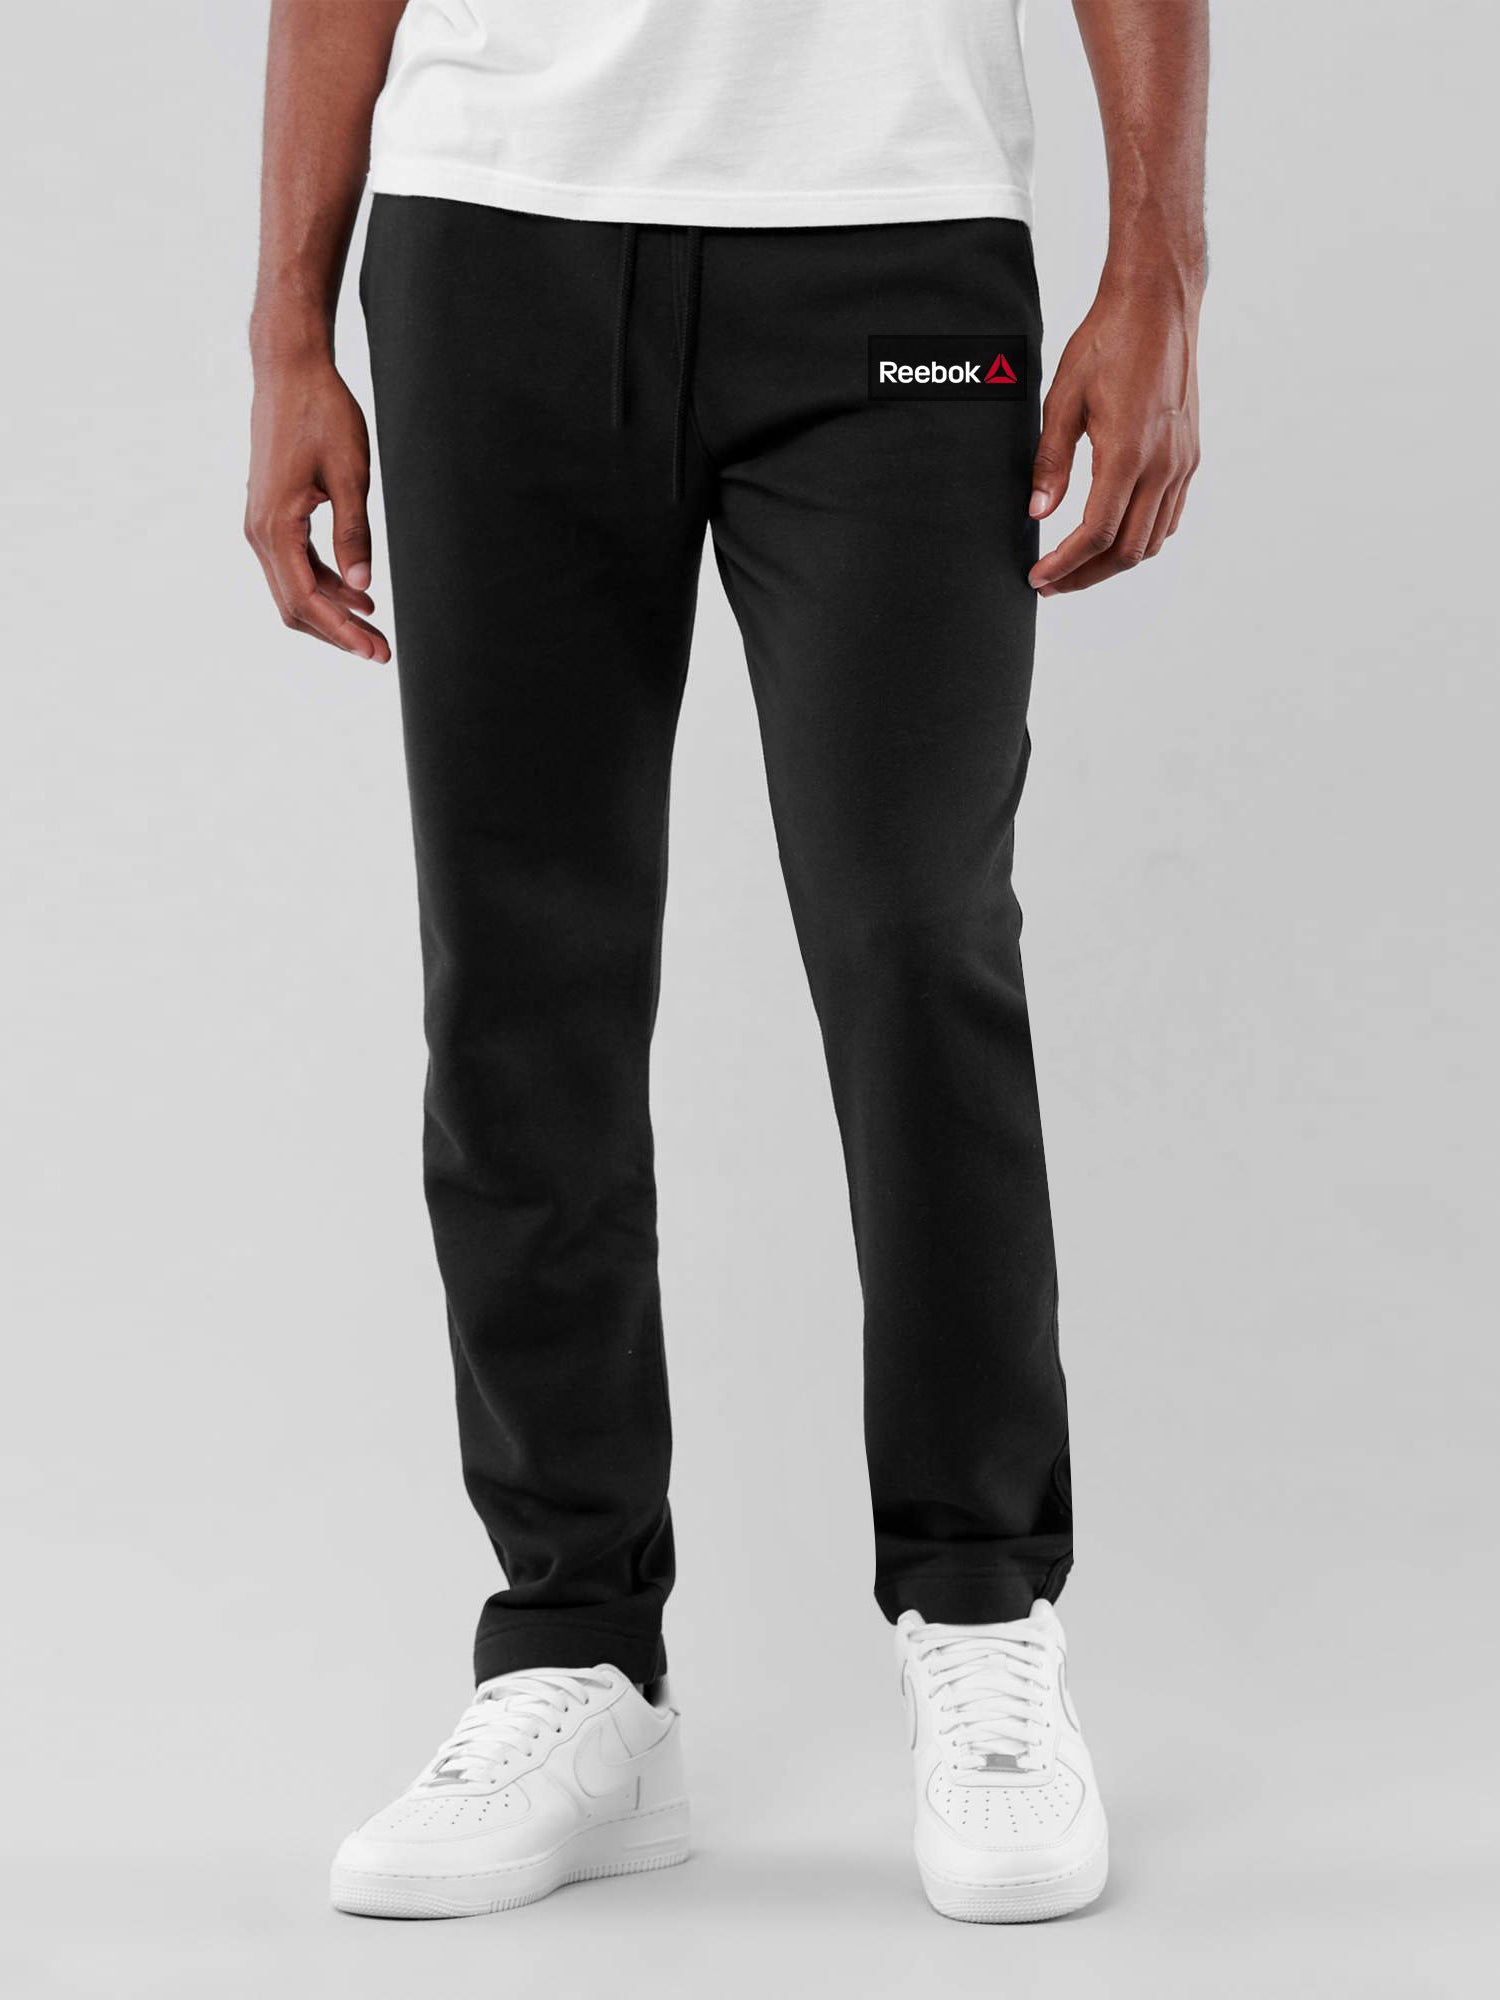 Demokrati mirakel Antage RB Heavy Fleece Straight Fit Trouser For Men-Black-NA12382 - BrandsEgo.Com